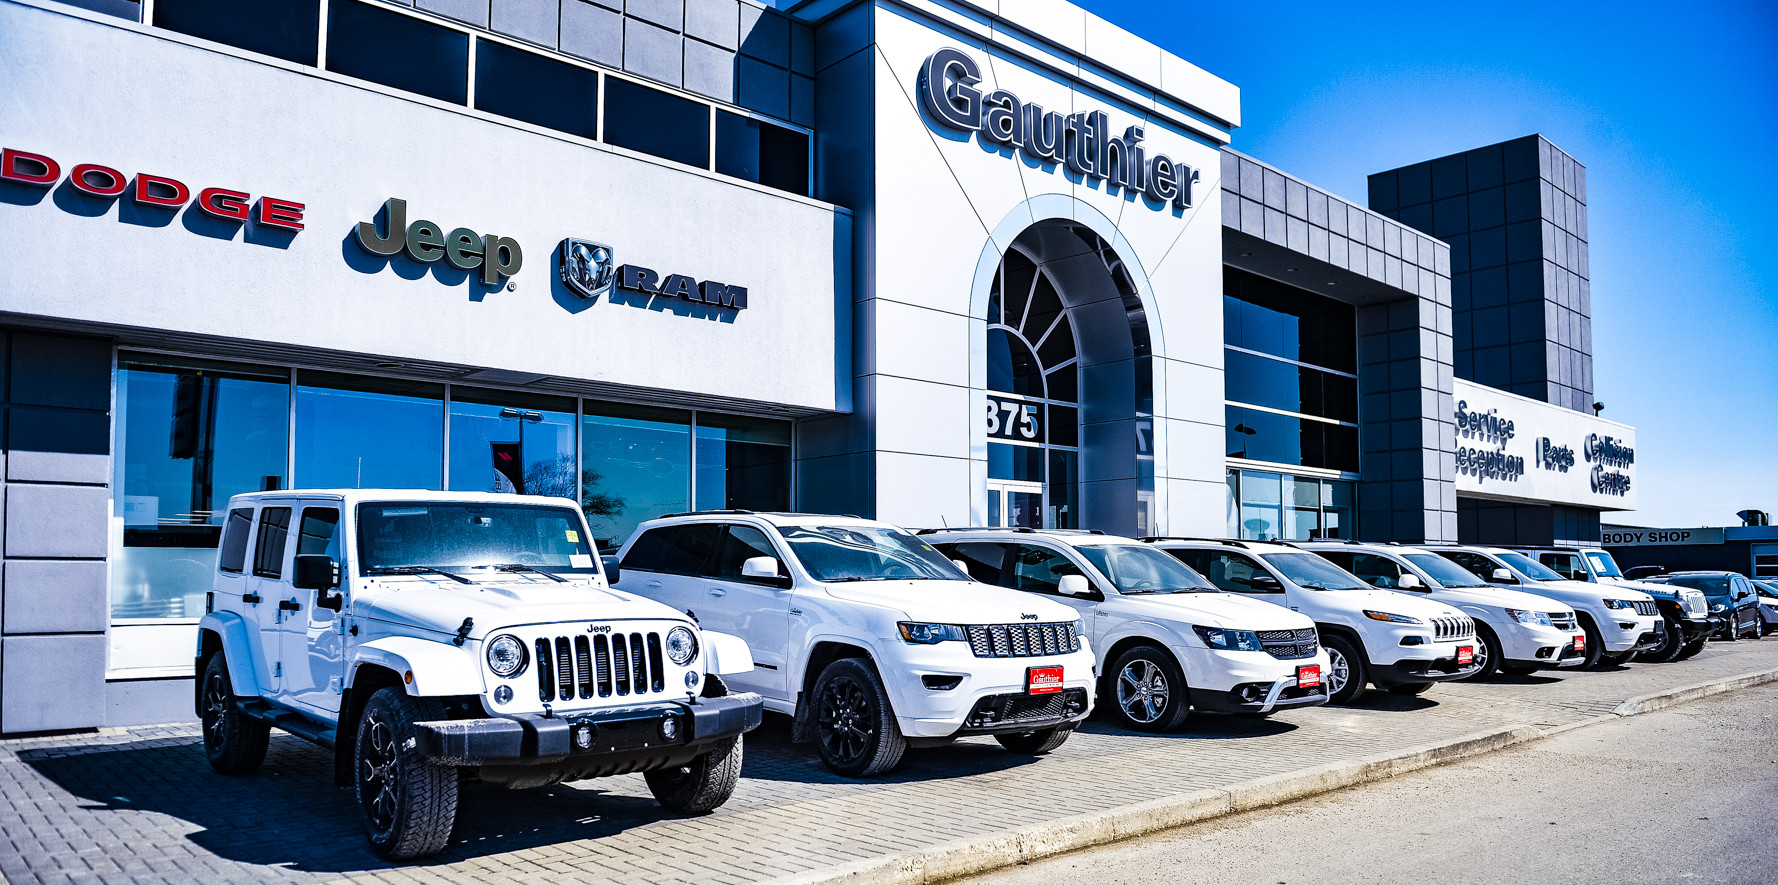 Gauthier Chrysler Dodge Jeep RAM Dealership Winnipeg Manitoba